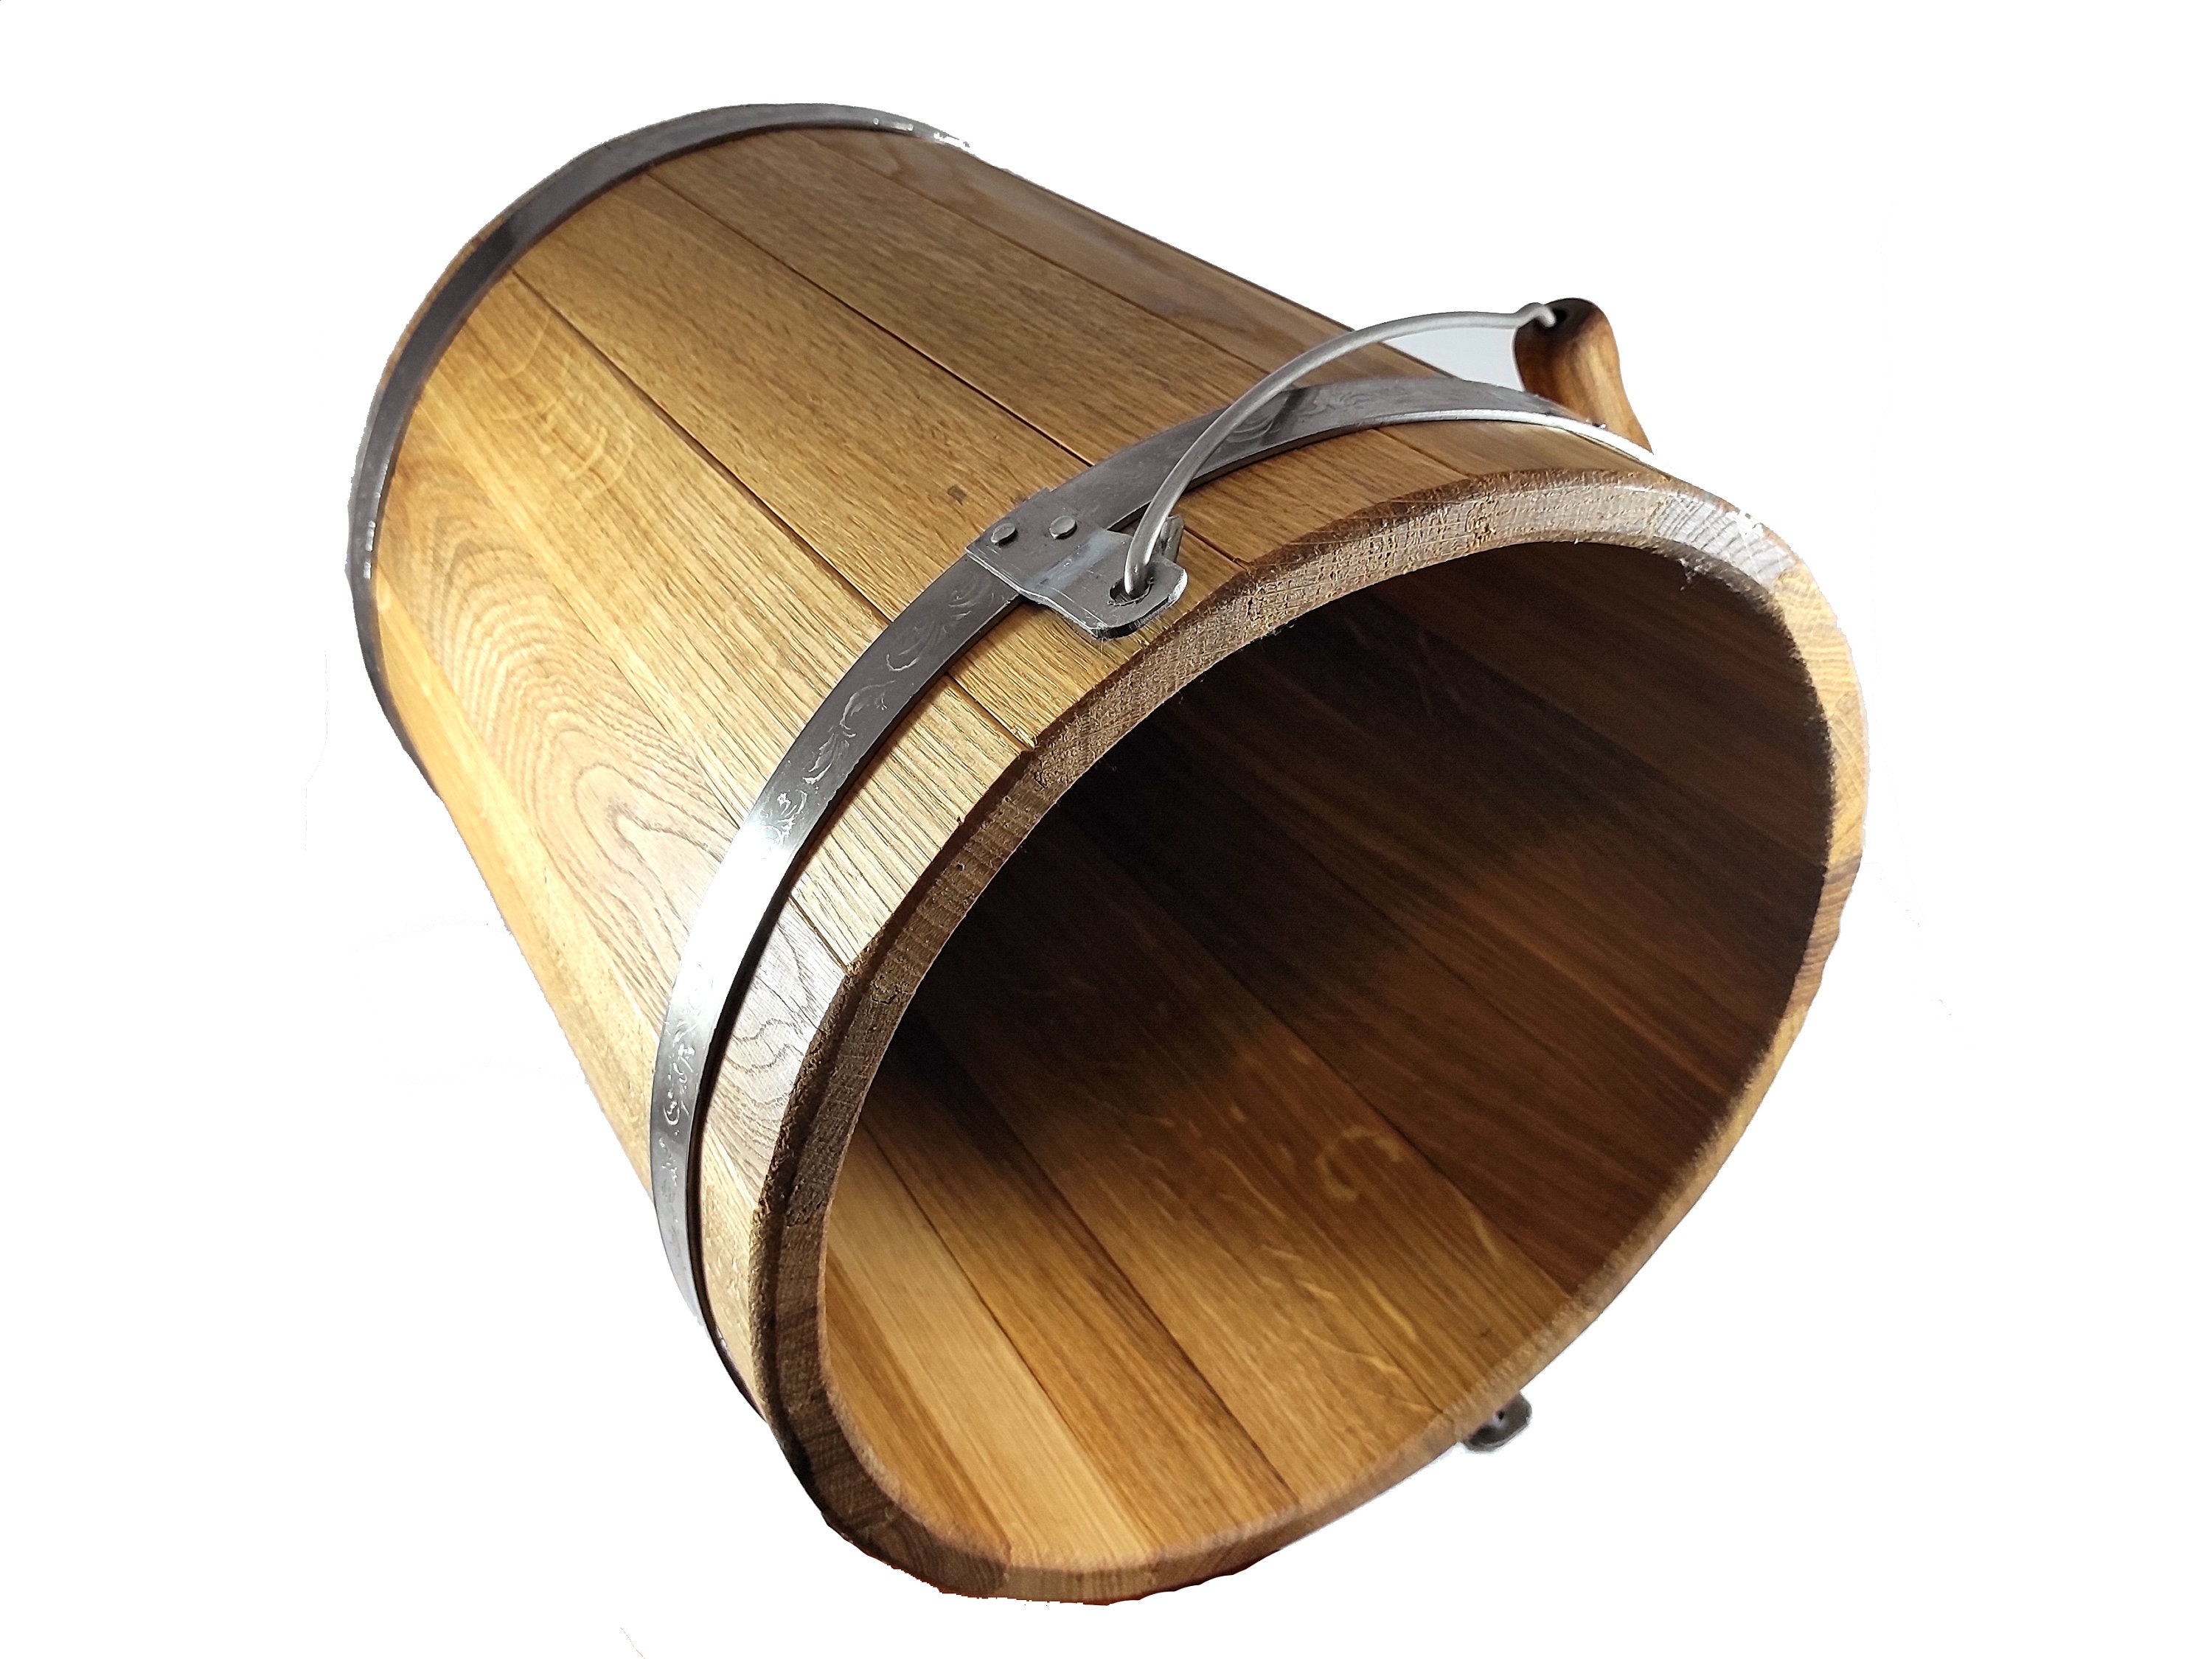 Wooden Solid Oak Bucket 15L Bath Crafting Supplies Handmade Wood